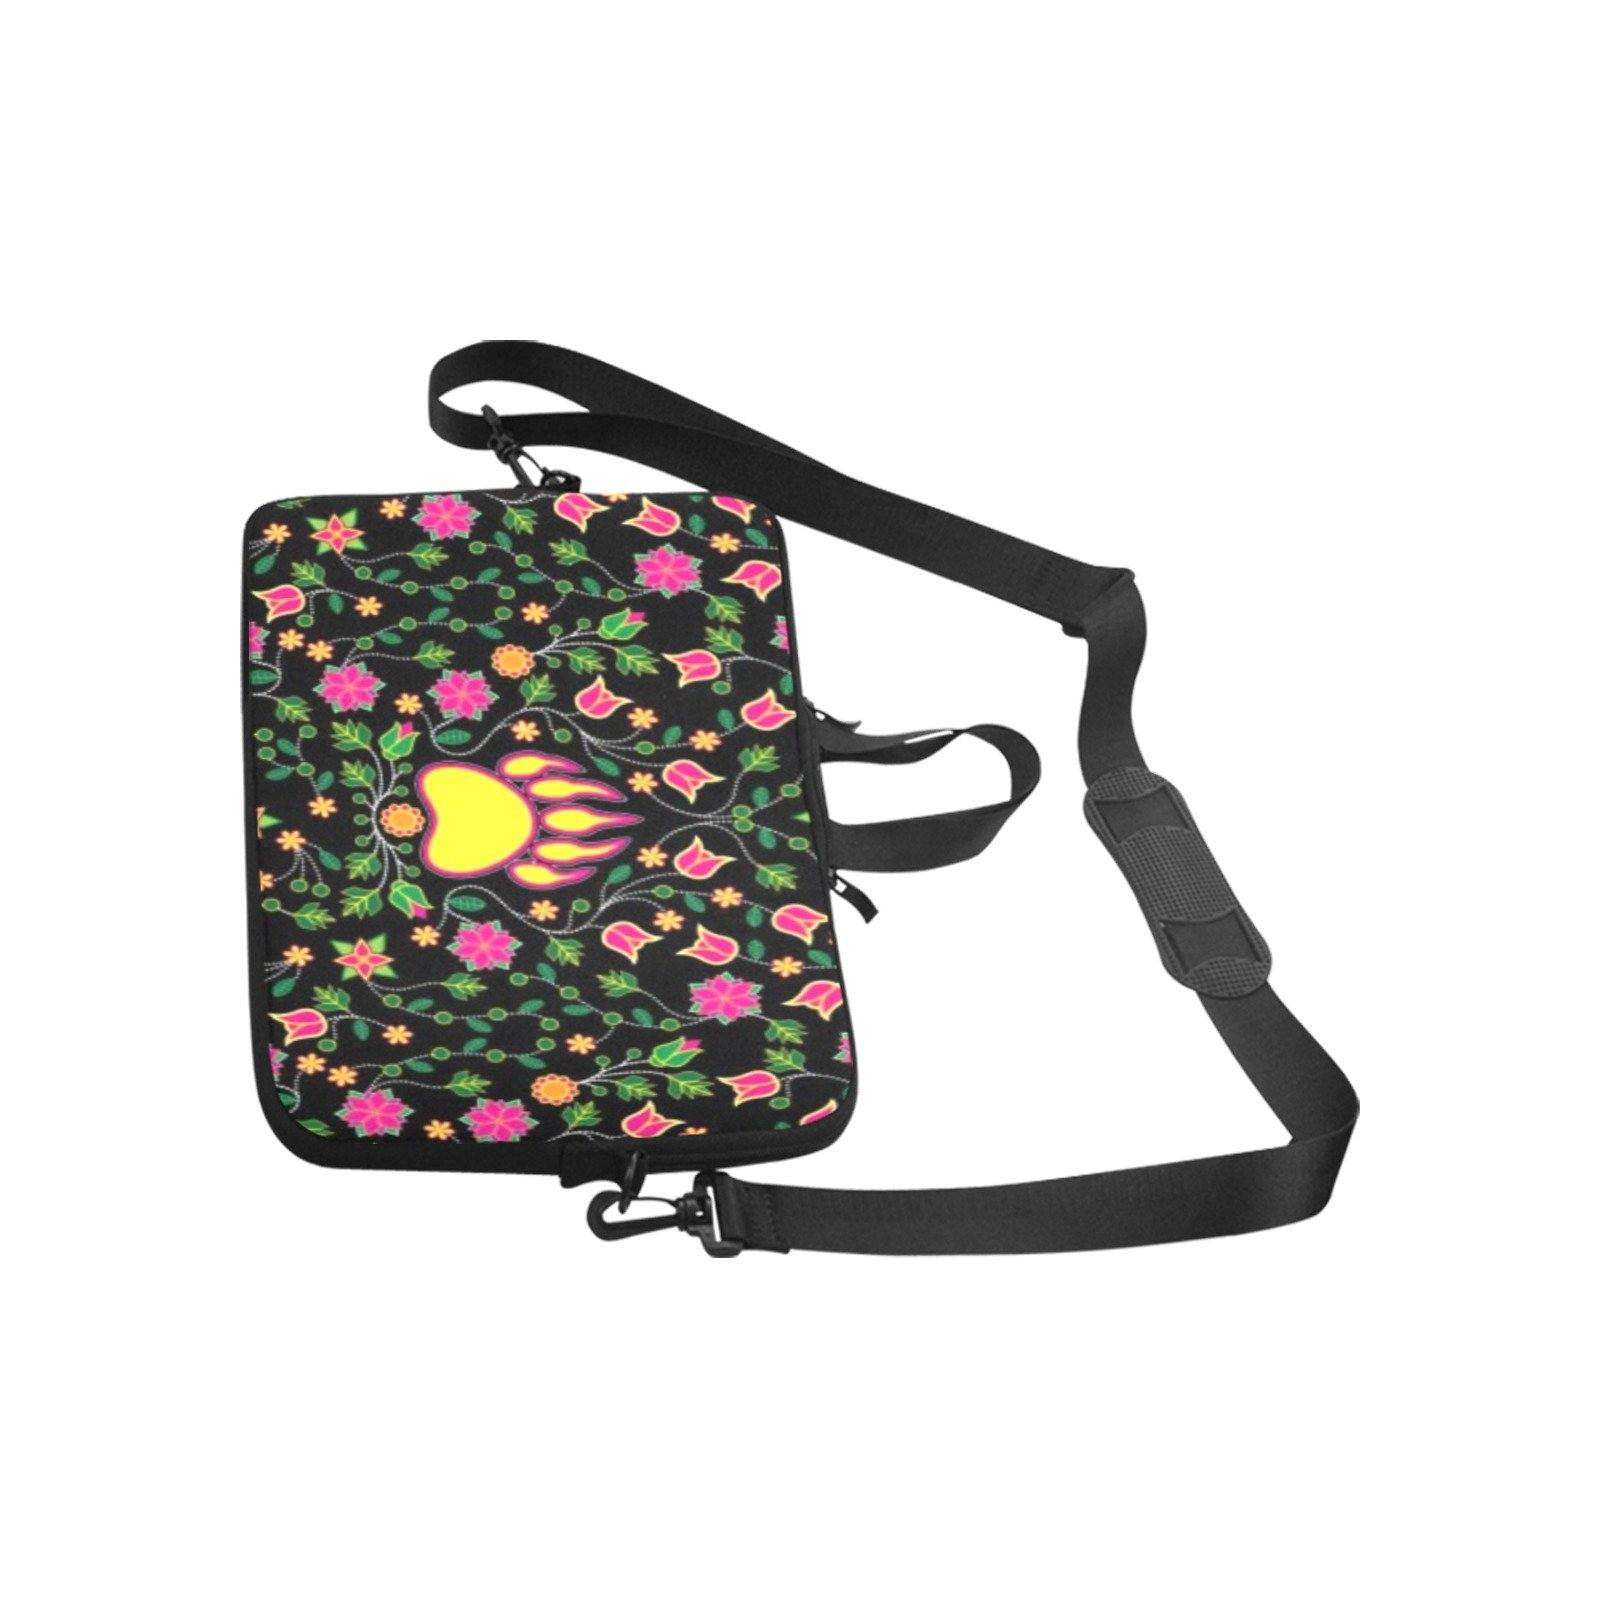 Floral Bearpaw Pink and Yellow Laptop Handbags 13" Laptop Handbags 13" e-joyer 